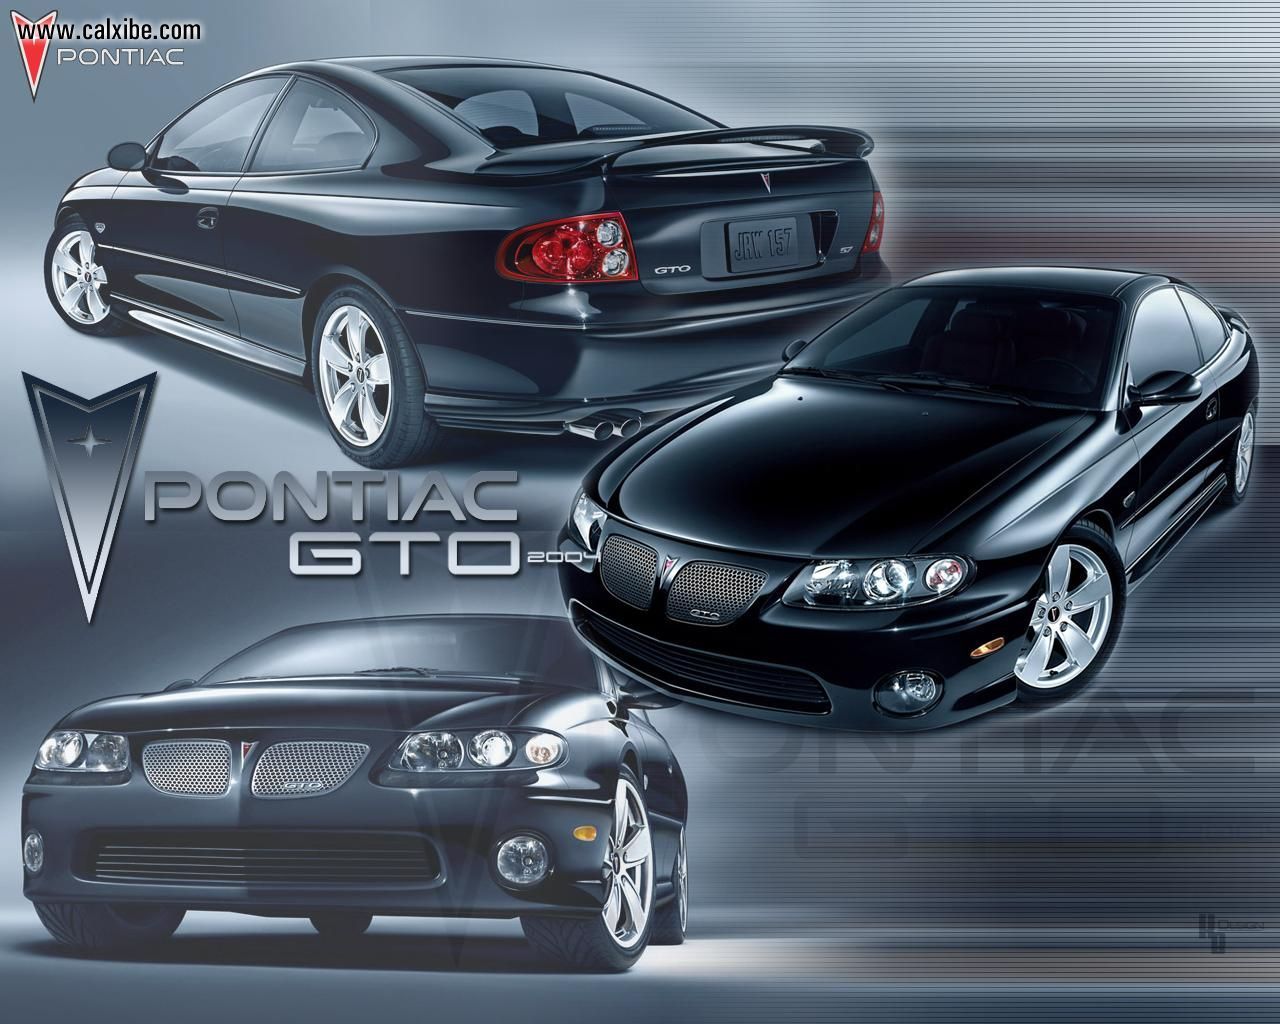 2004 Pontiac Gto - Pontiac Gto 2016 Black , HD Wallpaper & Backgrounds